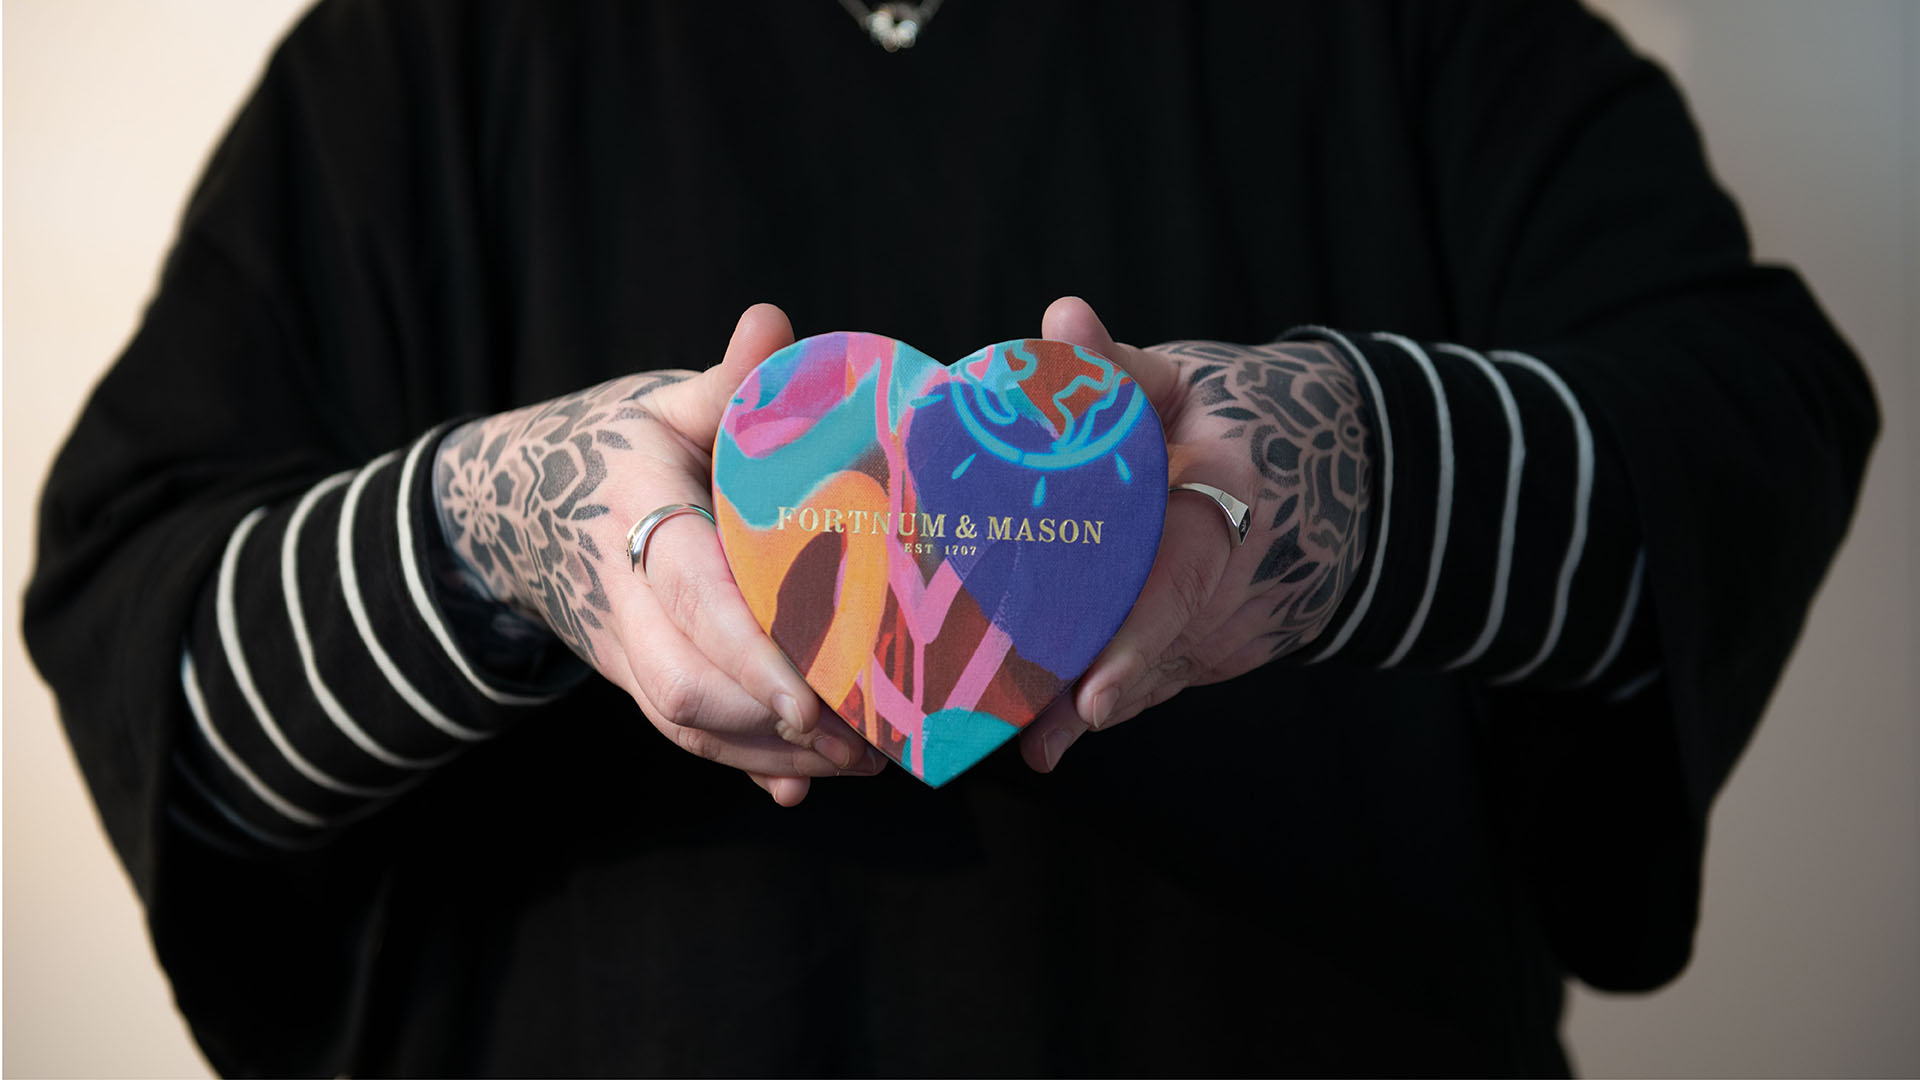 Fortnum & Mason's Inclusive Valentine's Range: A Design Bridge and Partners Collaboration